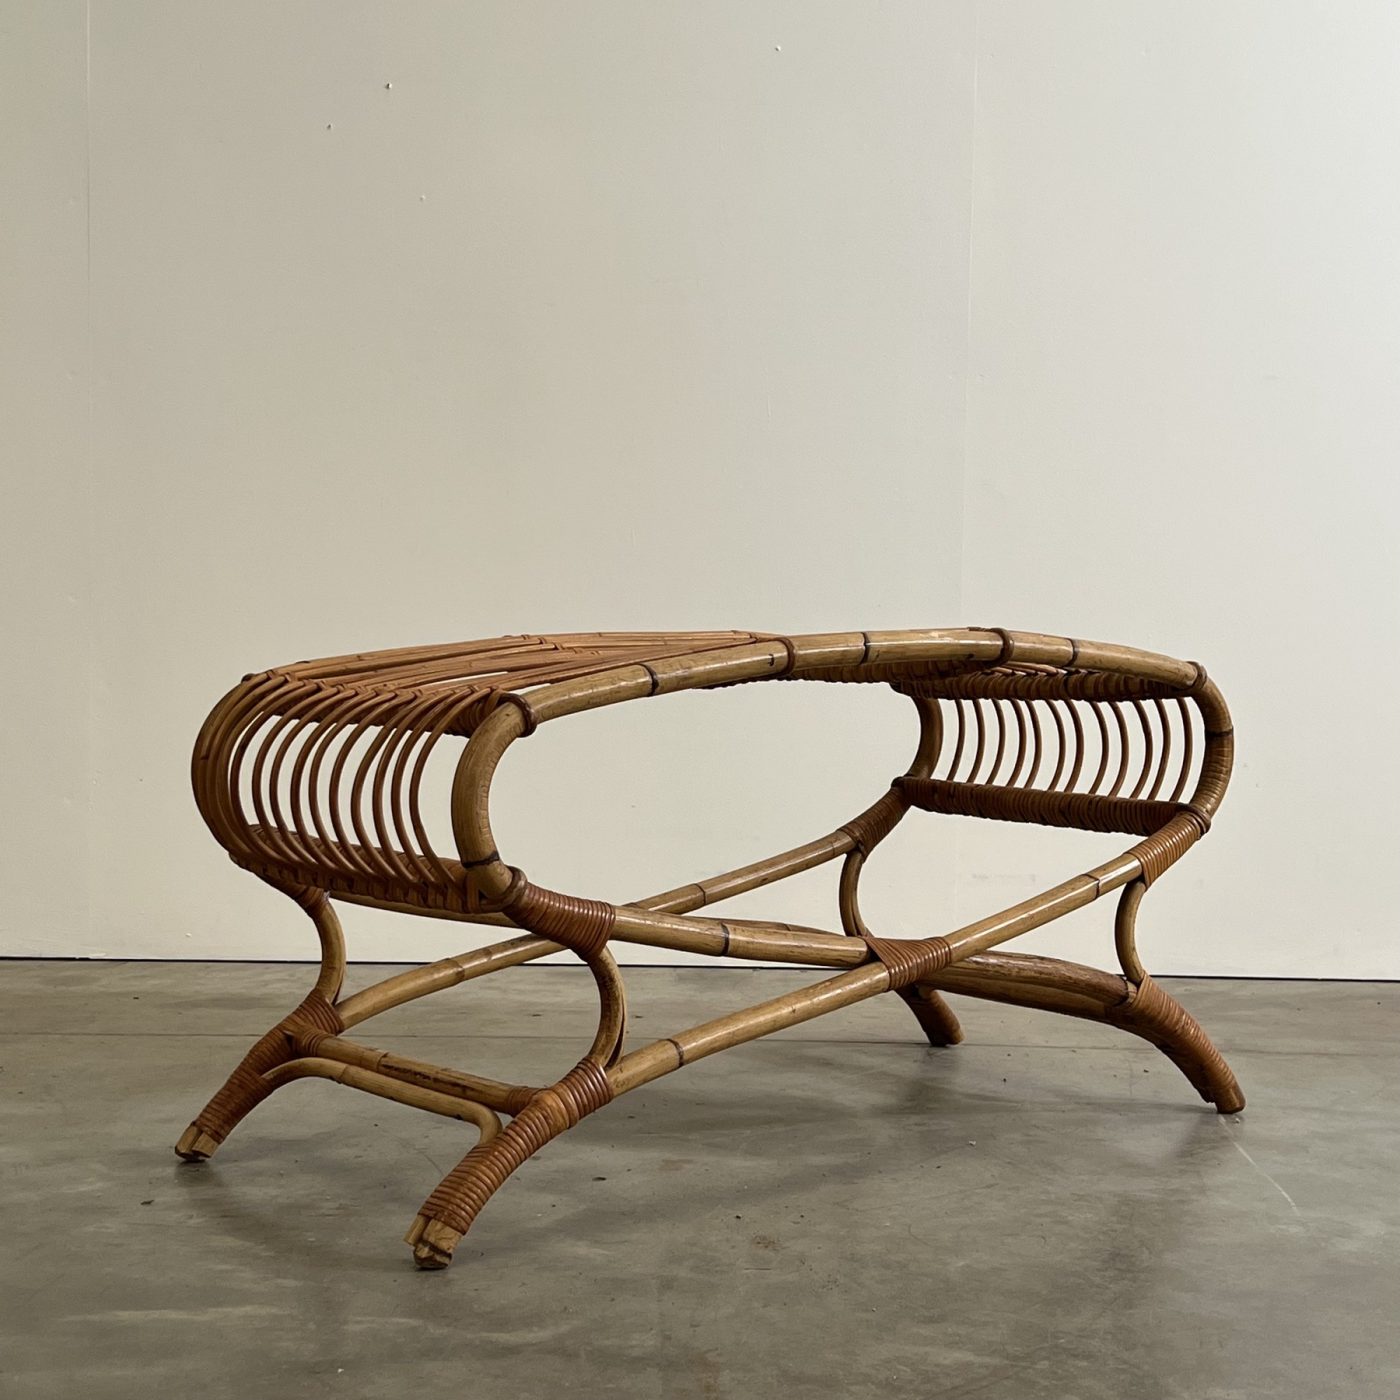 objet-vagabond-rattan-stool0004